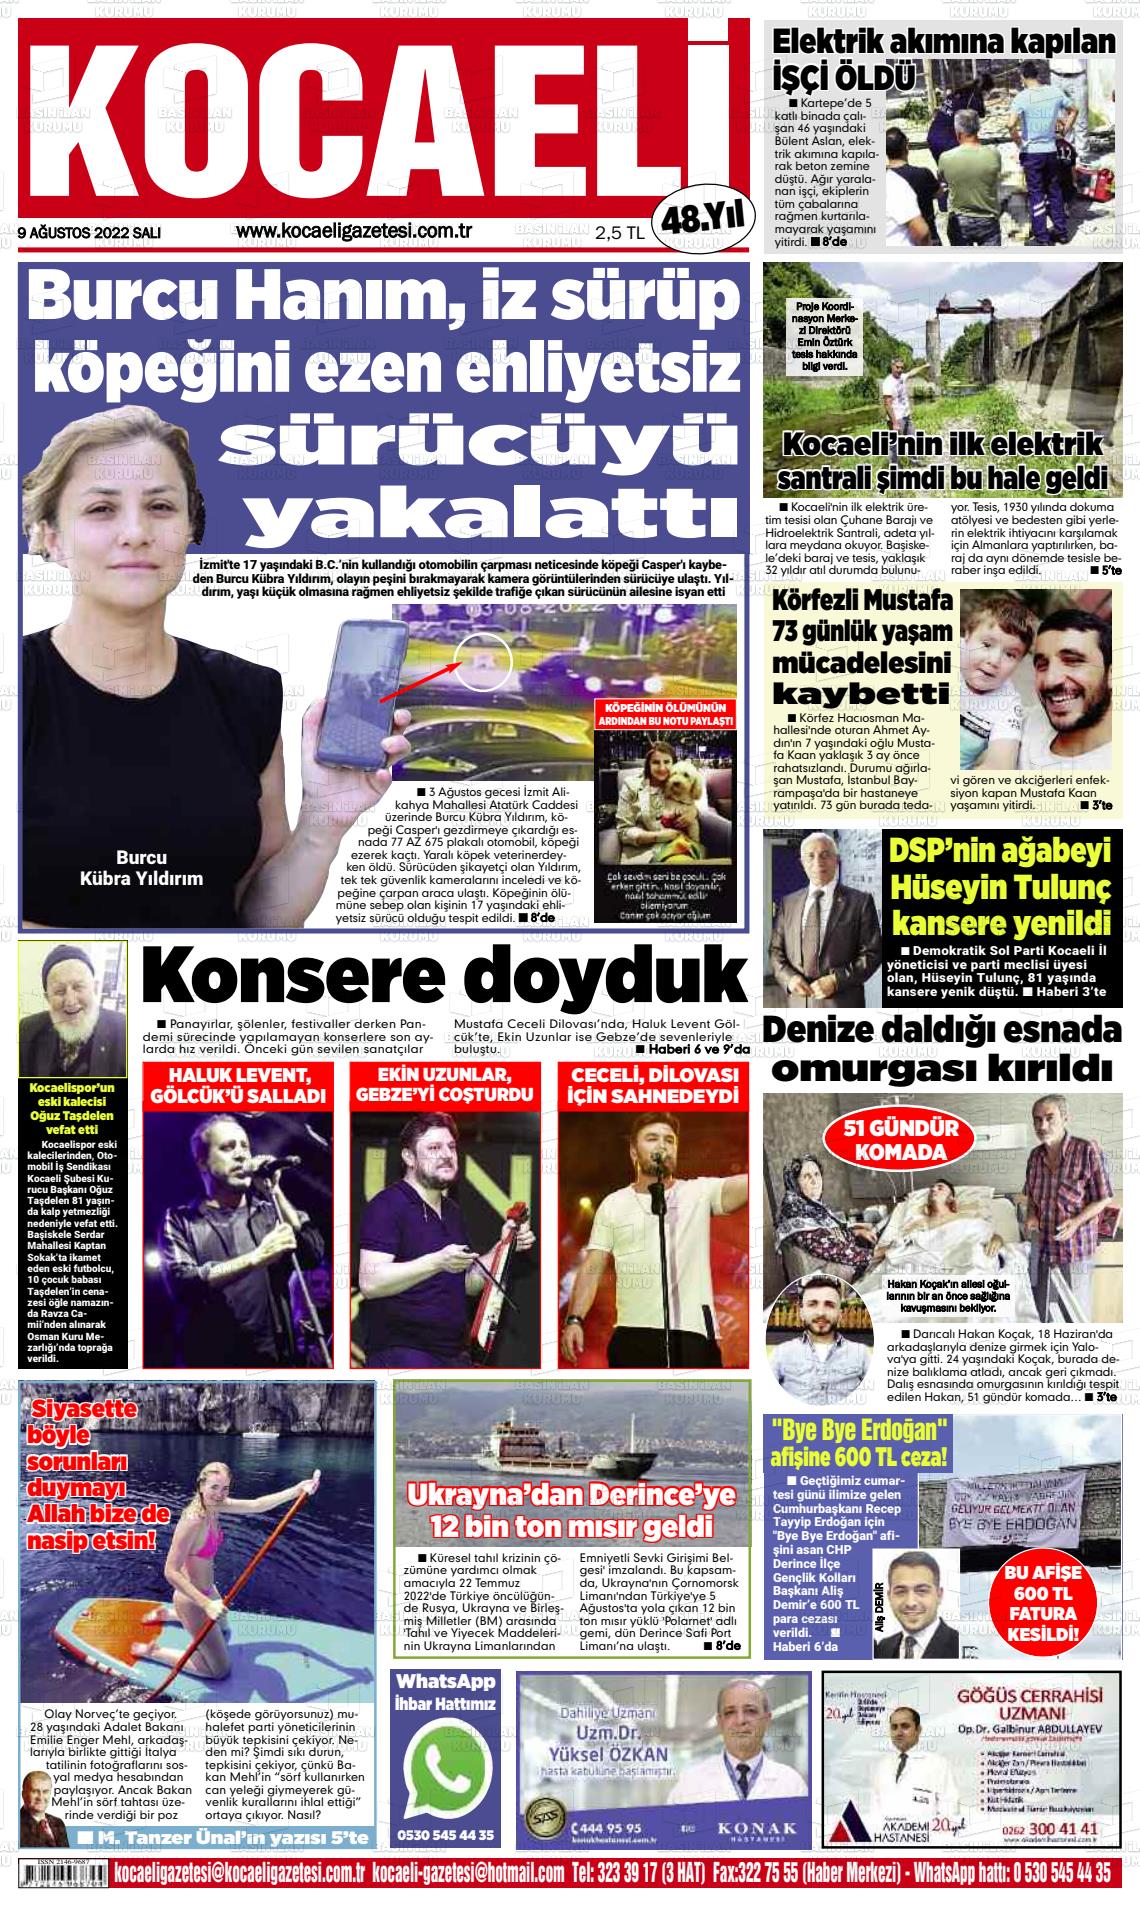 09 Ağustos 2022 Kocaeli Gazete Manşeti